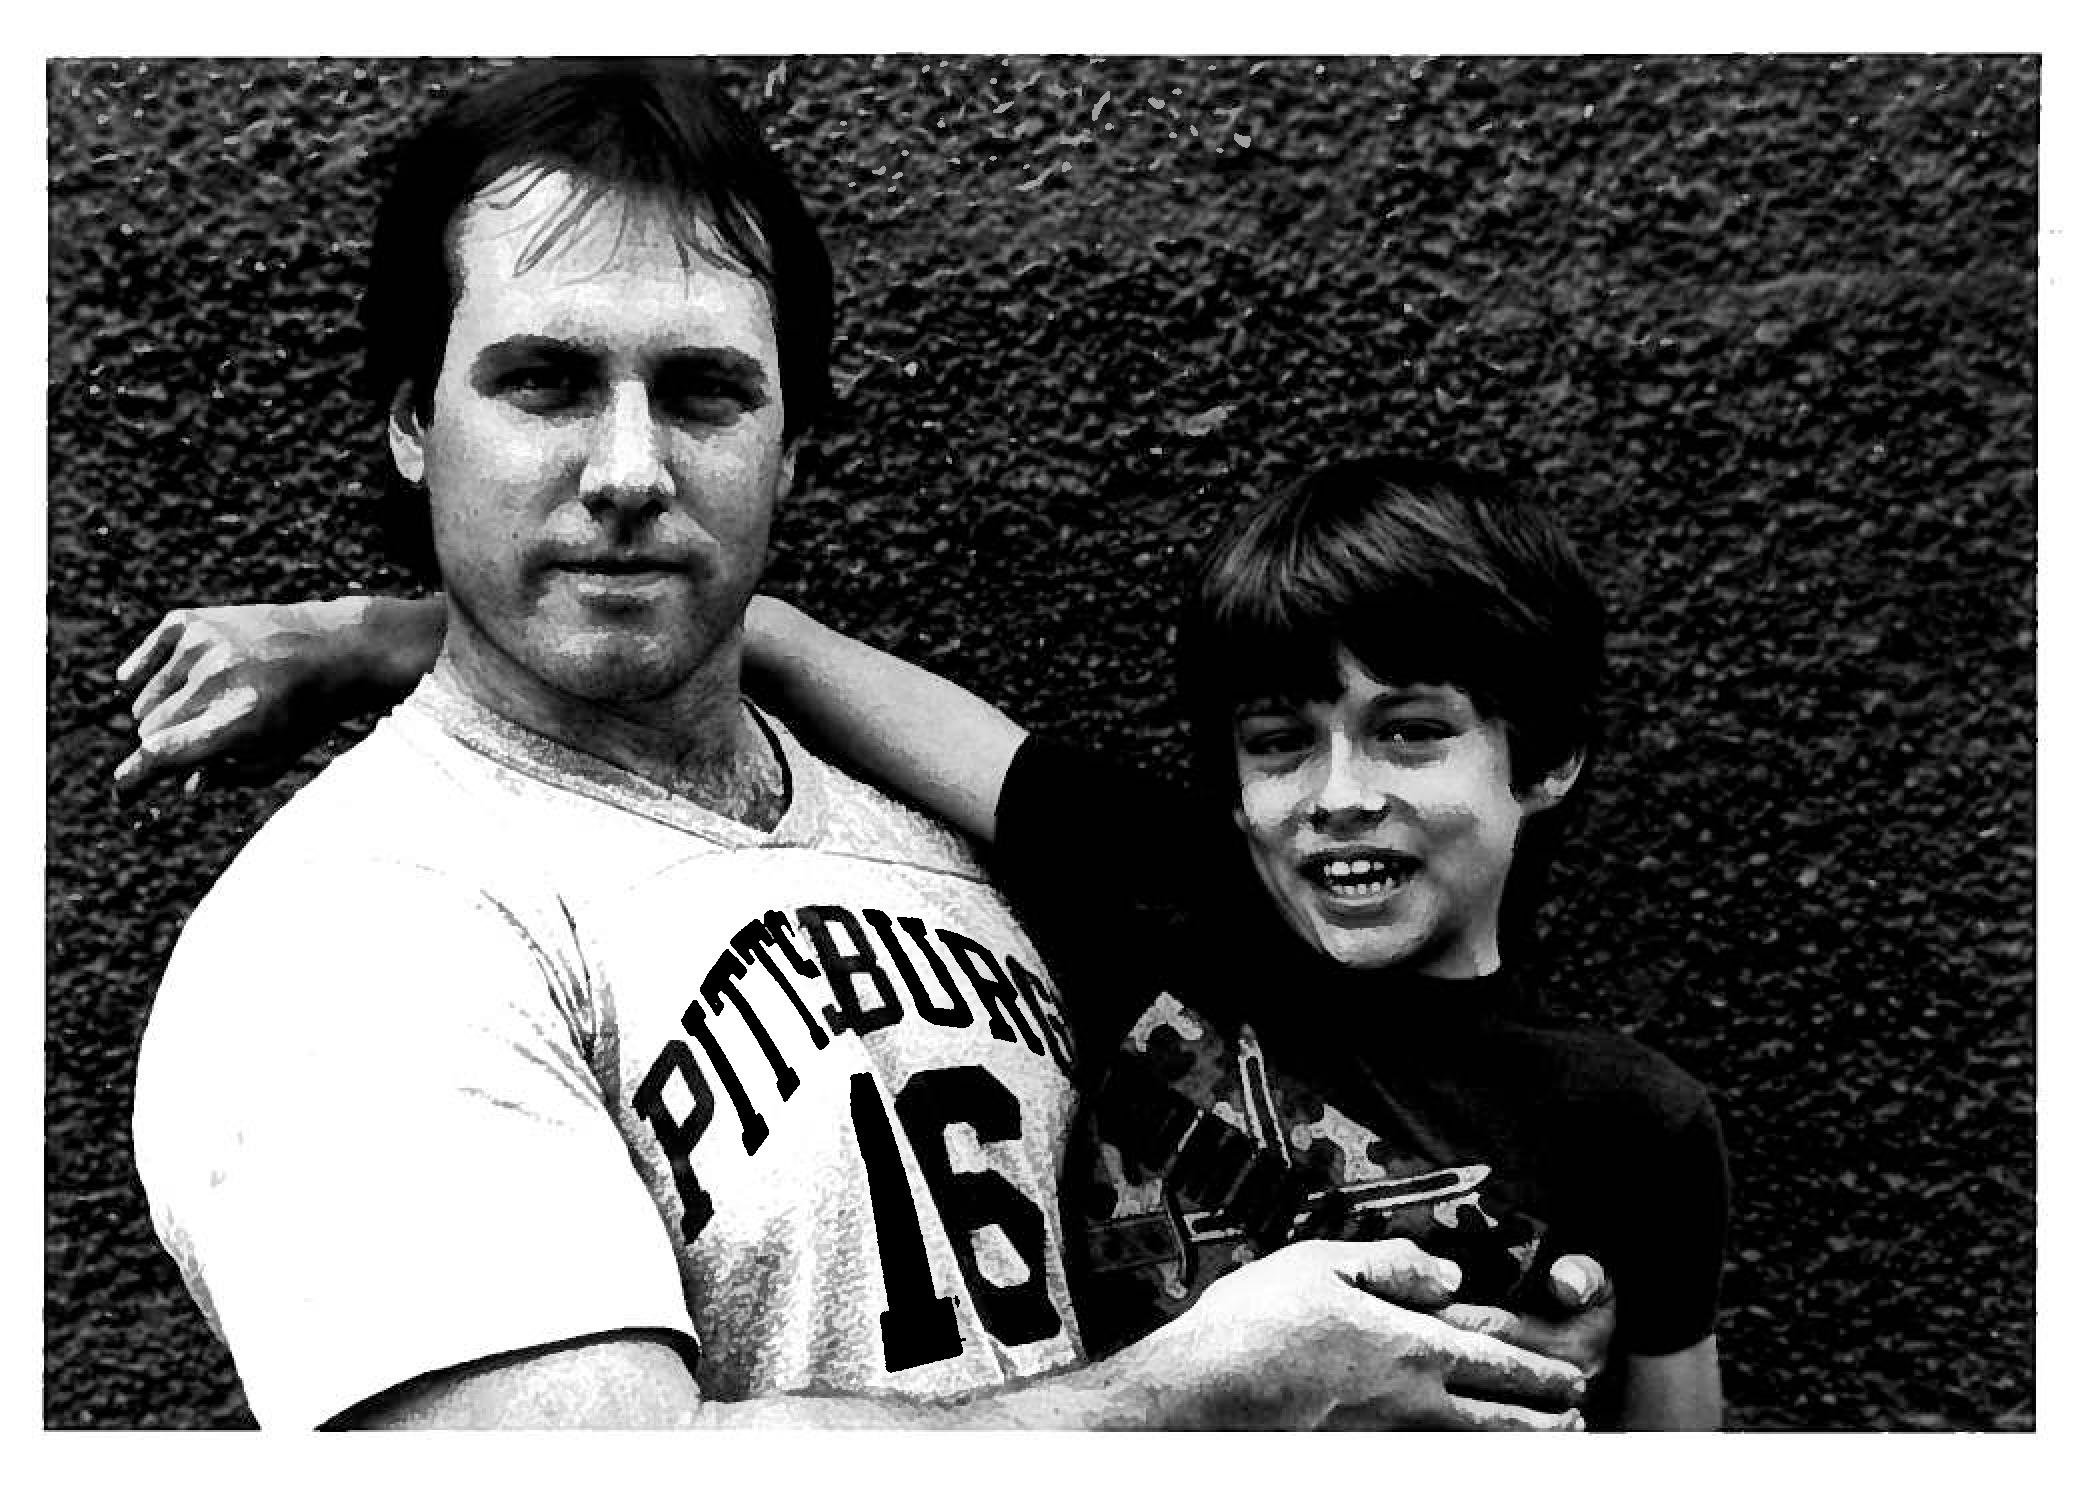 Kenny et papa-page-001.jpg